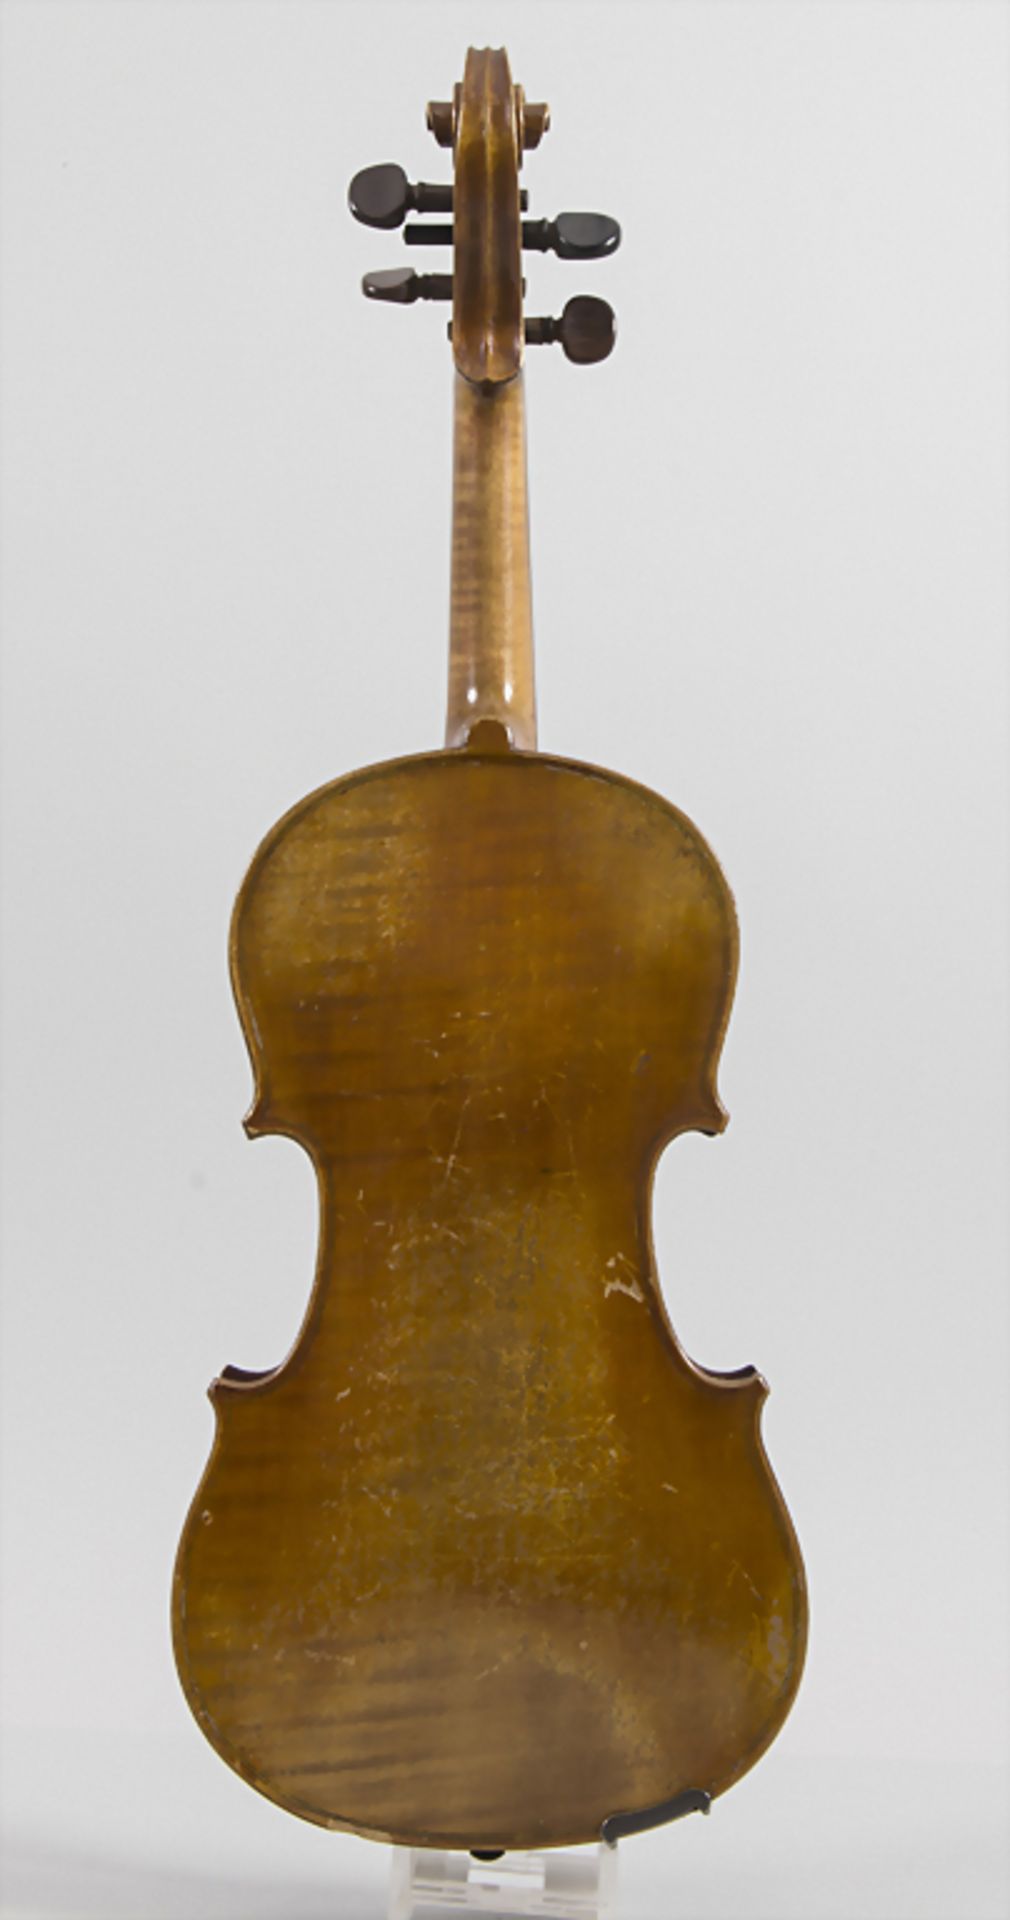 Violine / A violin, Modell 'Stradivari', Frankreich, um 1920 - Bild 3 aus 5